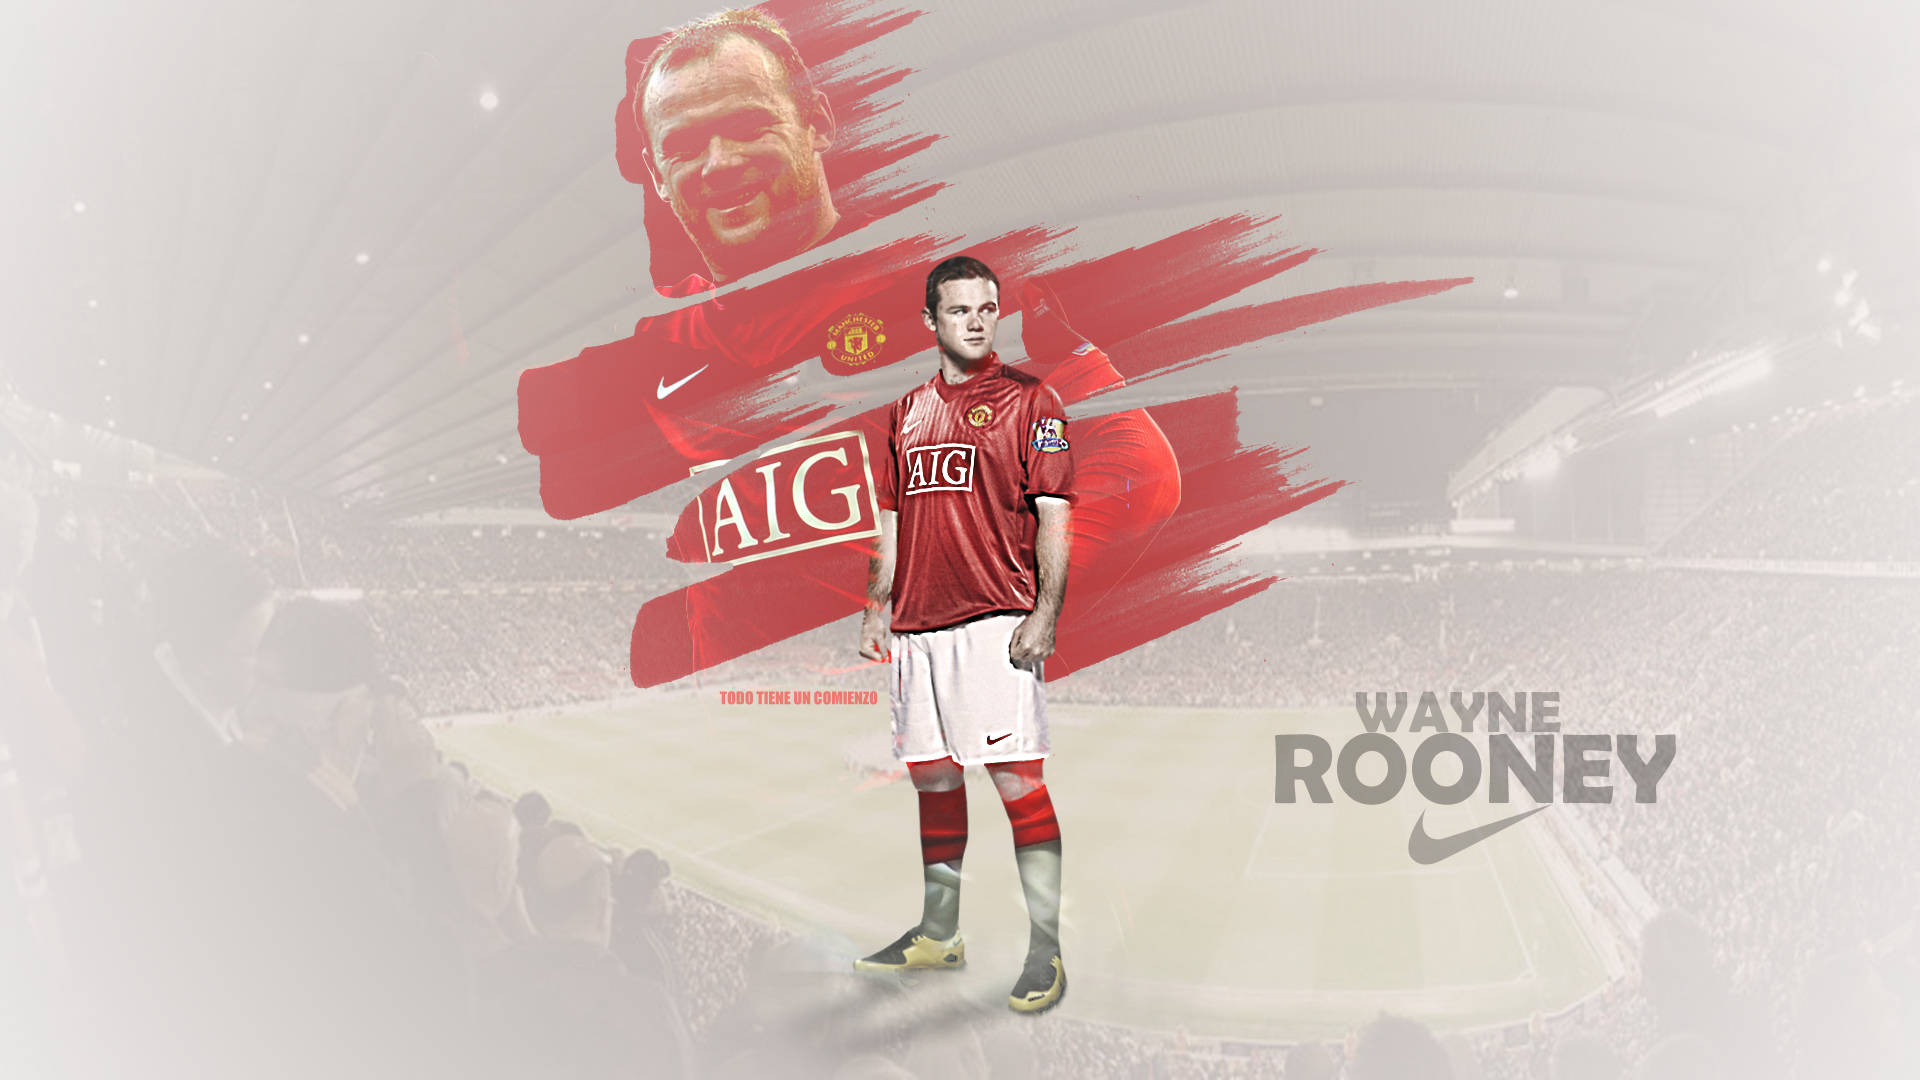 Wayne Rooney Aig Picture